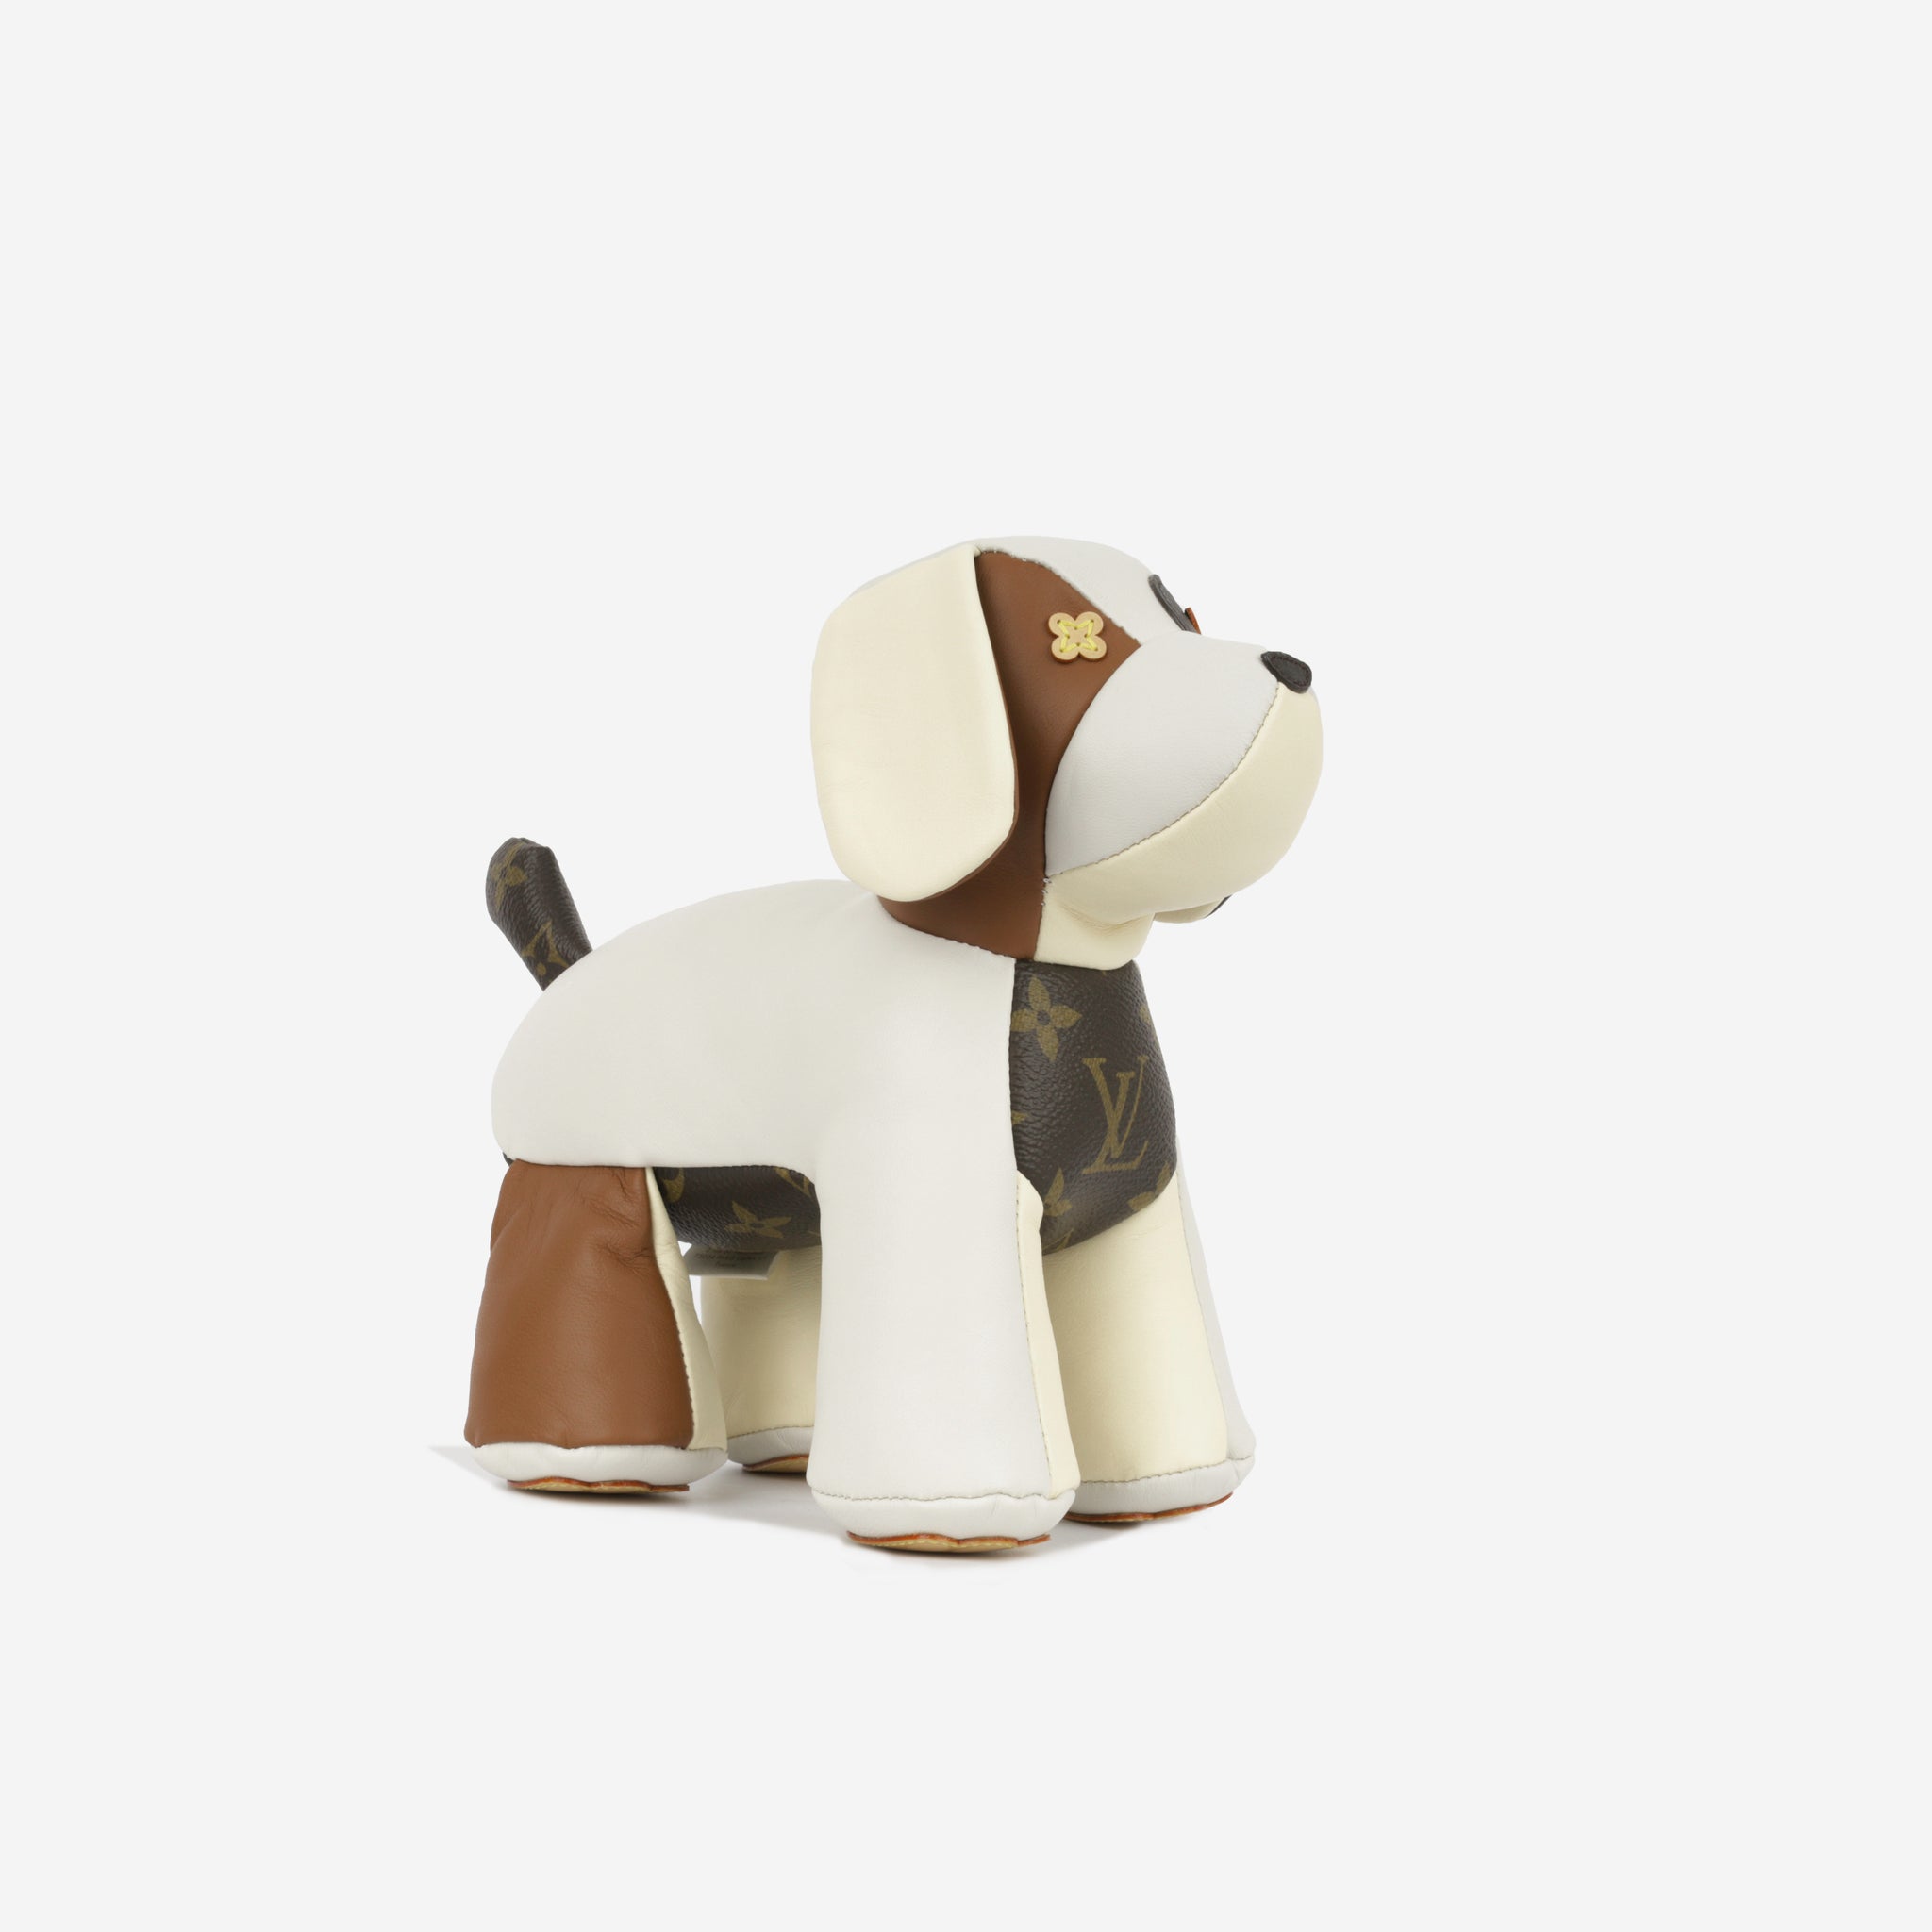 Authentic Louis Vuitton Doudou Oscar Leather Stuffed Dog